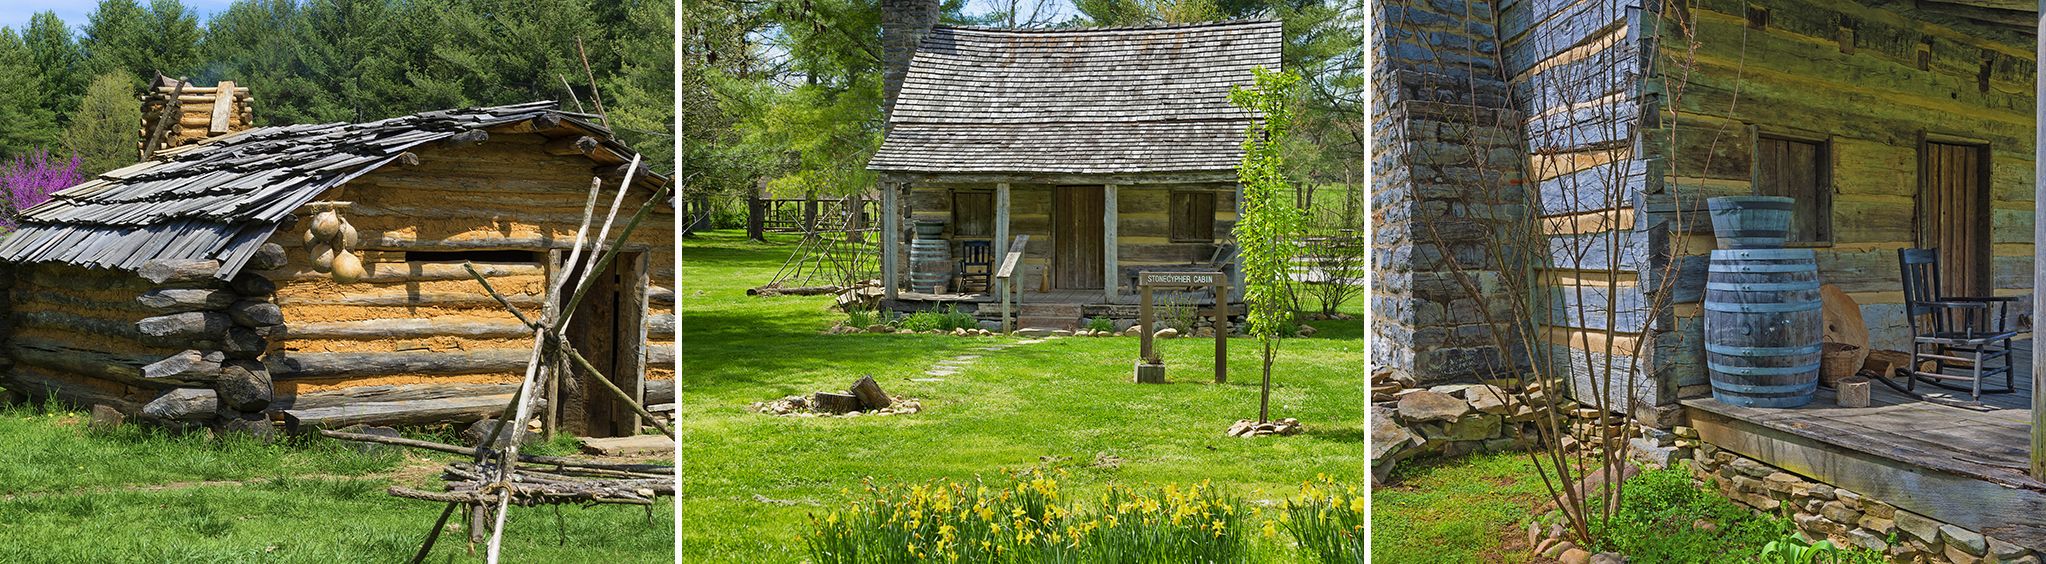 Davy Crockett Birthplace State Park near Pigeon Forge, TN